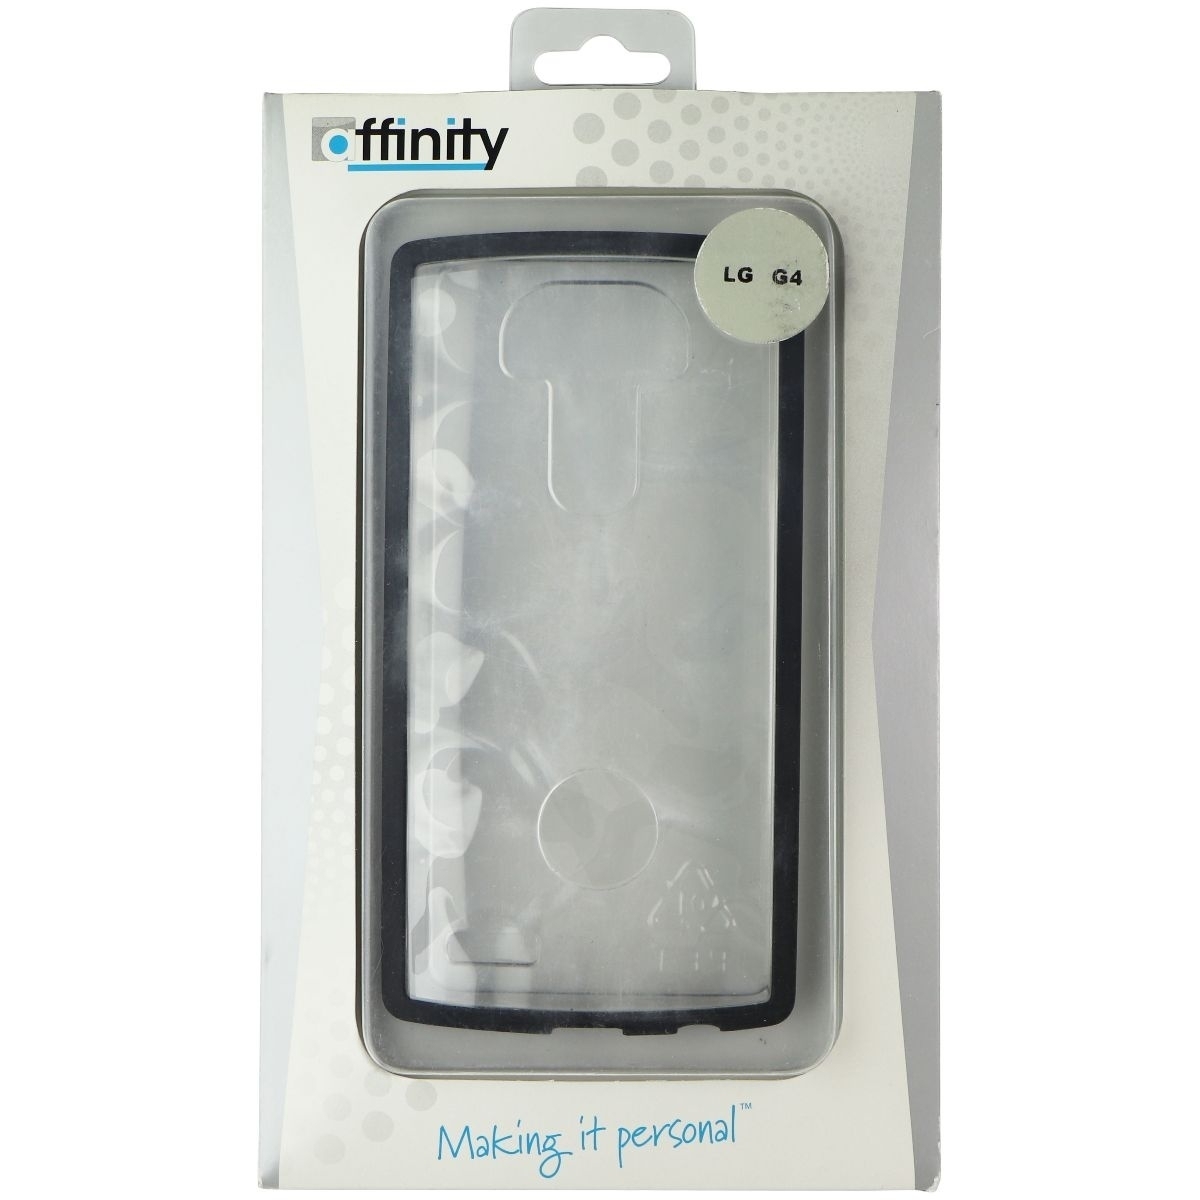 Affinity Hardshell Series Case For LG G4 - Black/Clear